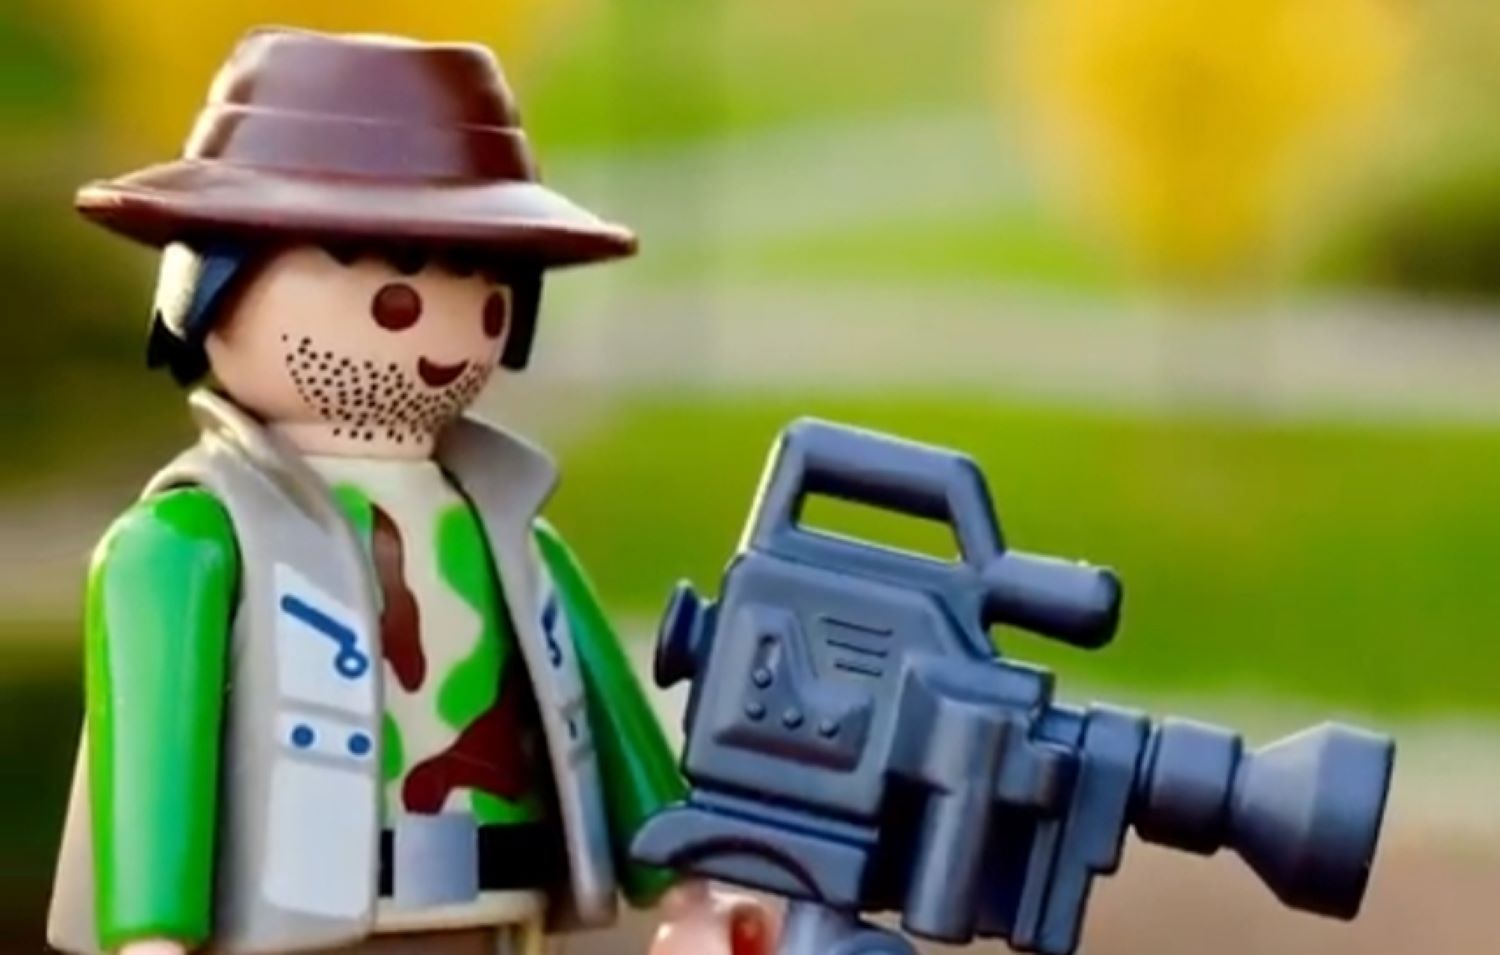 SIMAK! Berikut Deretan Fakta Menarik Permainan Lego, Ternyata Berasal dari Denmark